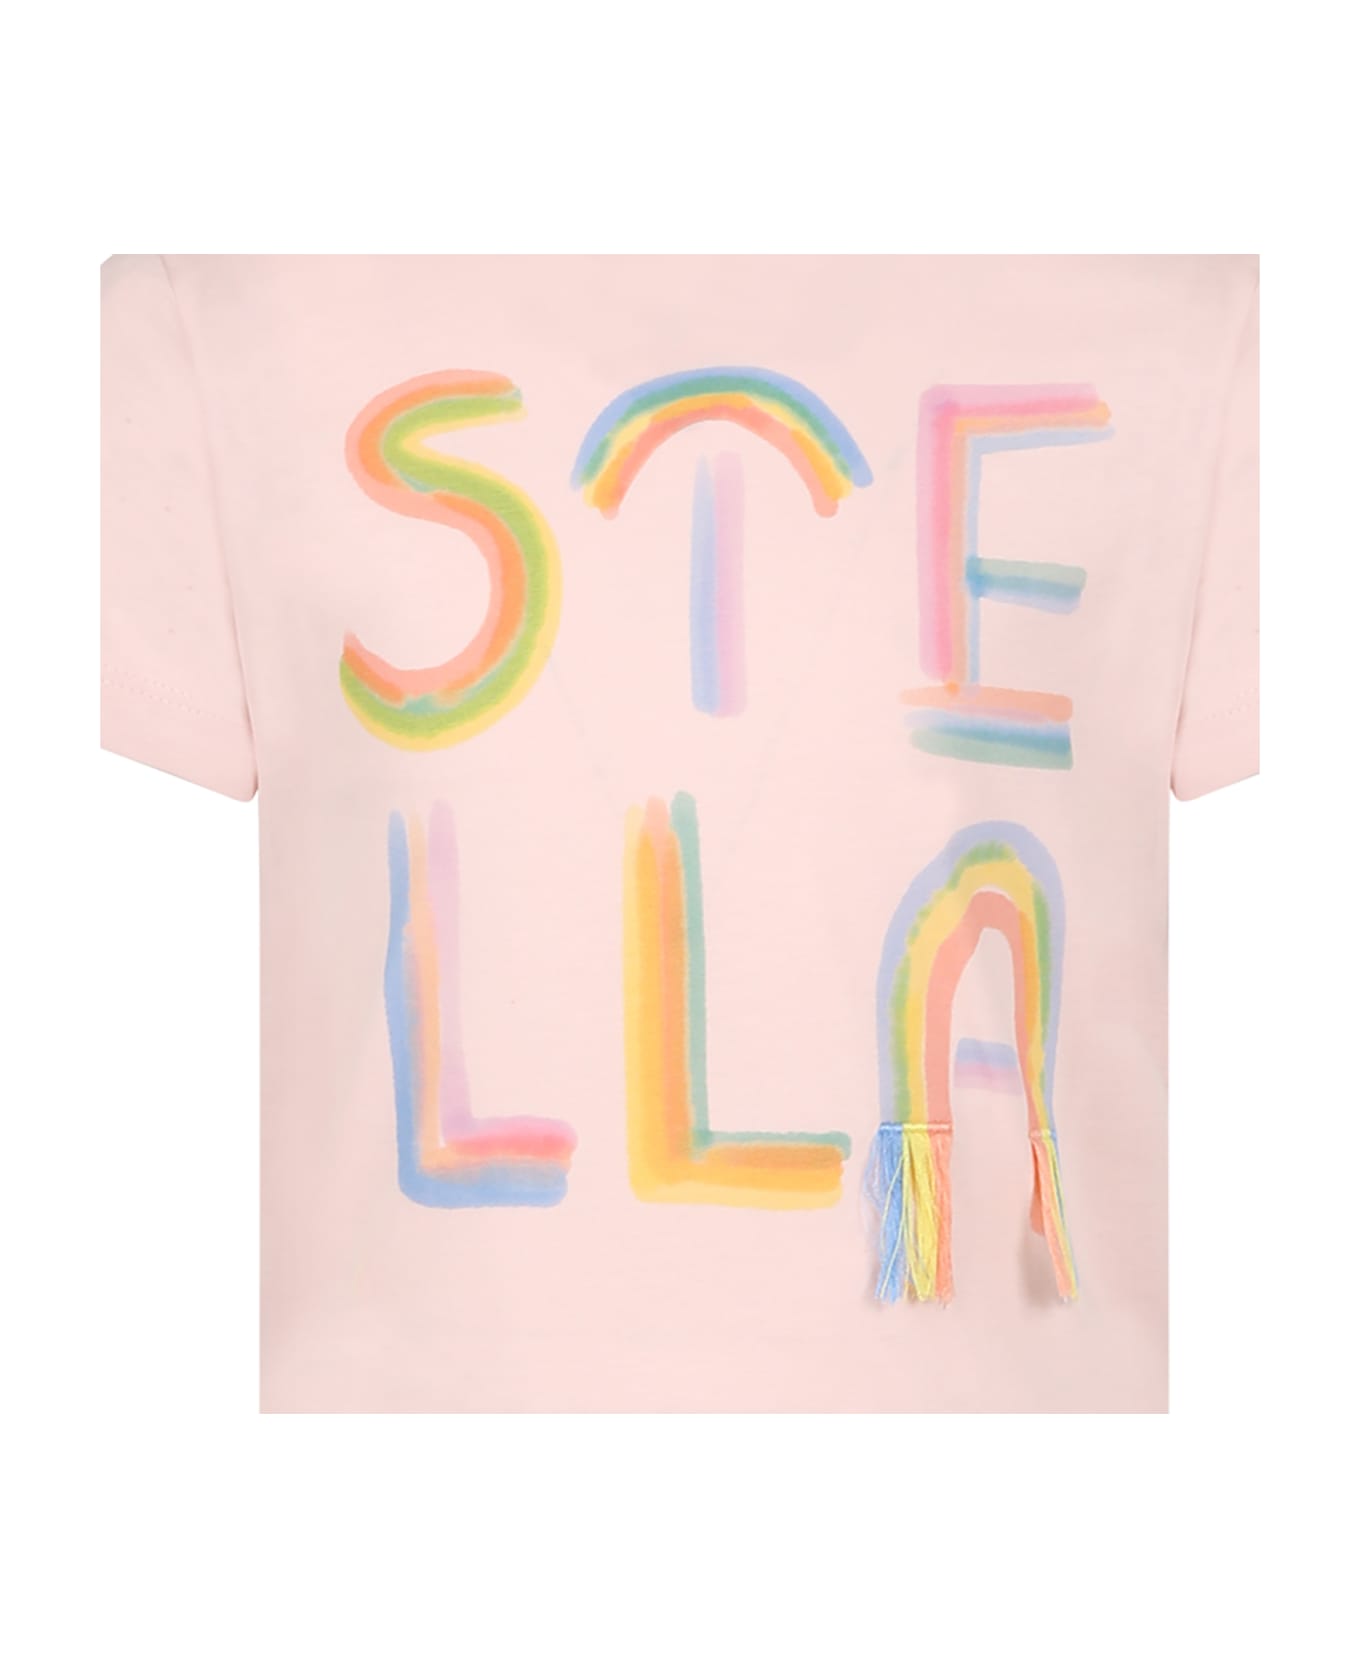 Stella McCartney Kids Pink T-shirt For Girl With Logo - Pink